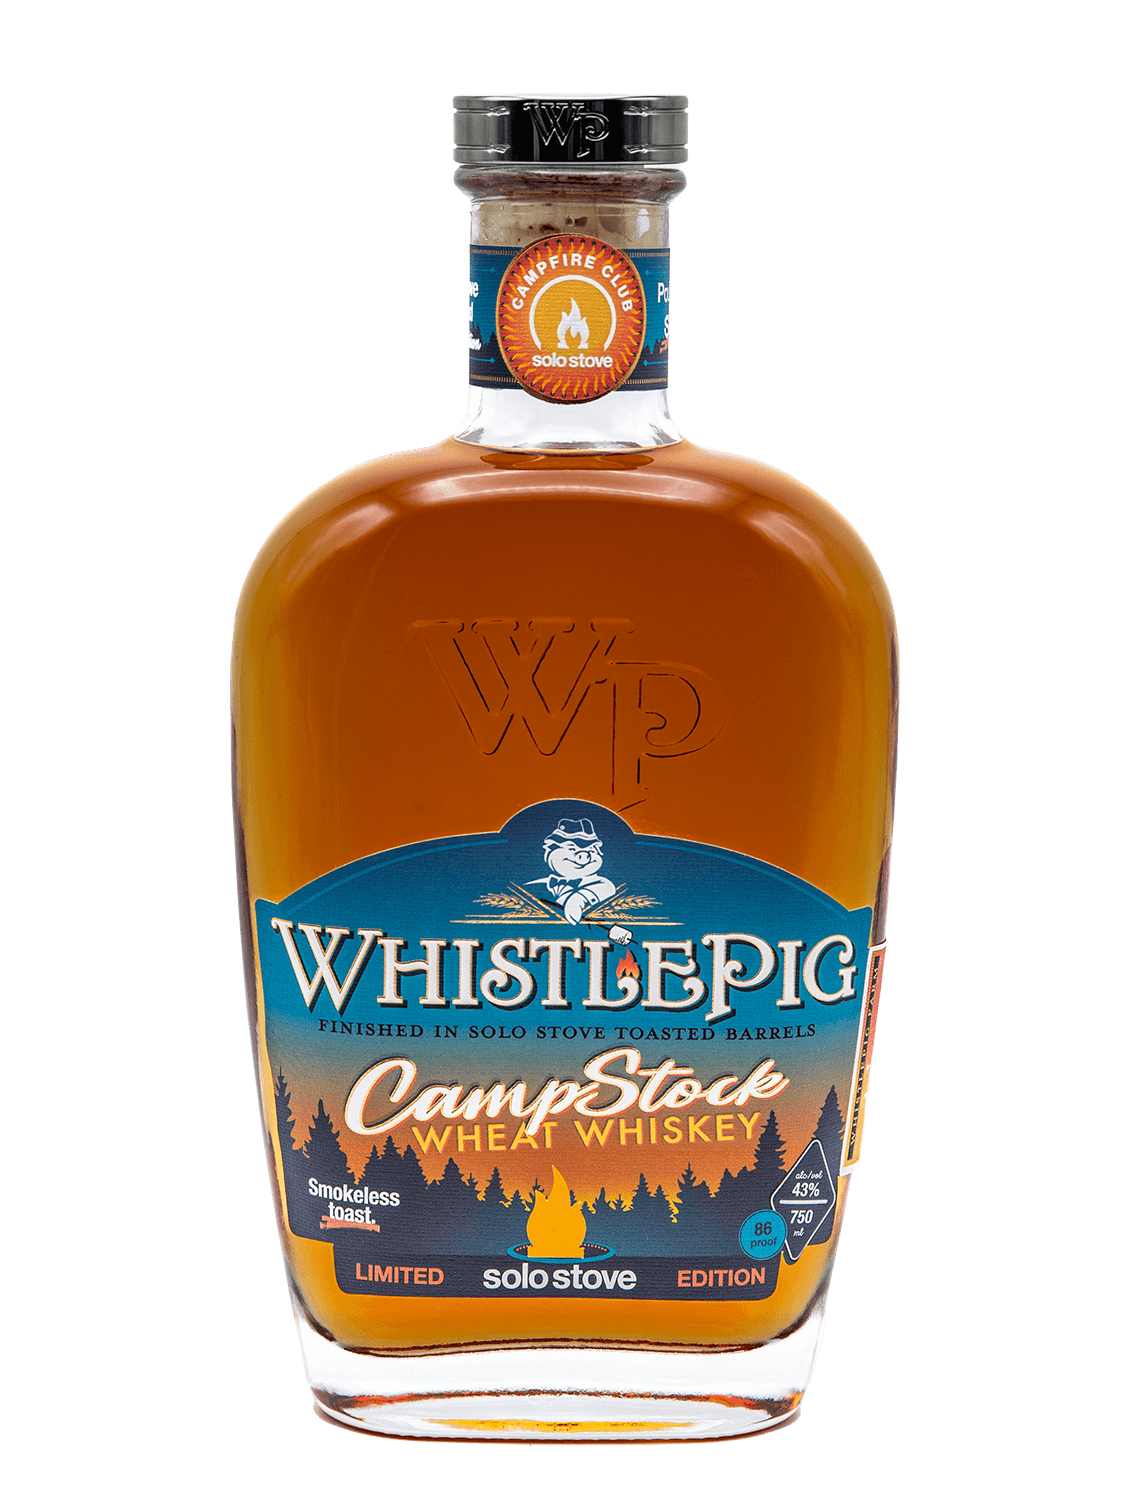 CampStock Wheat Whiskey